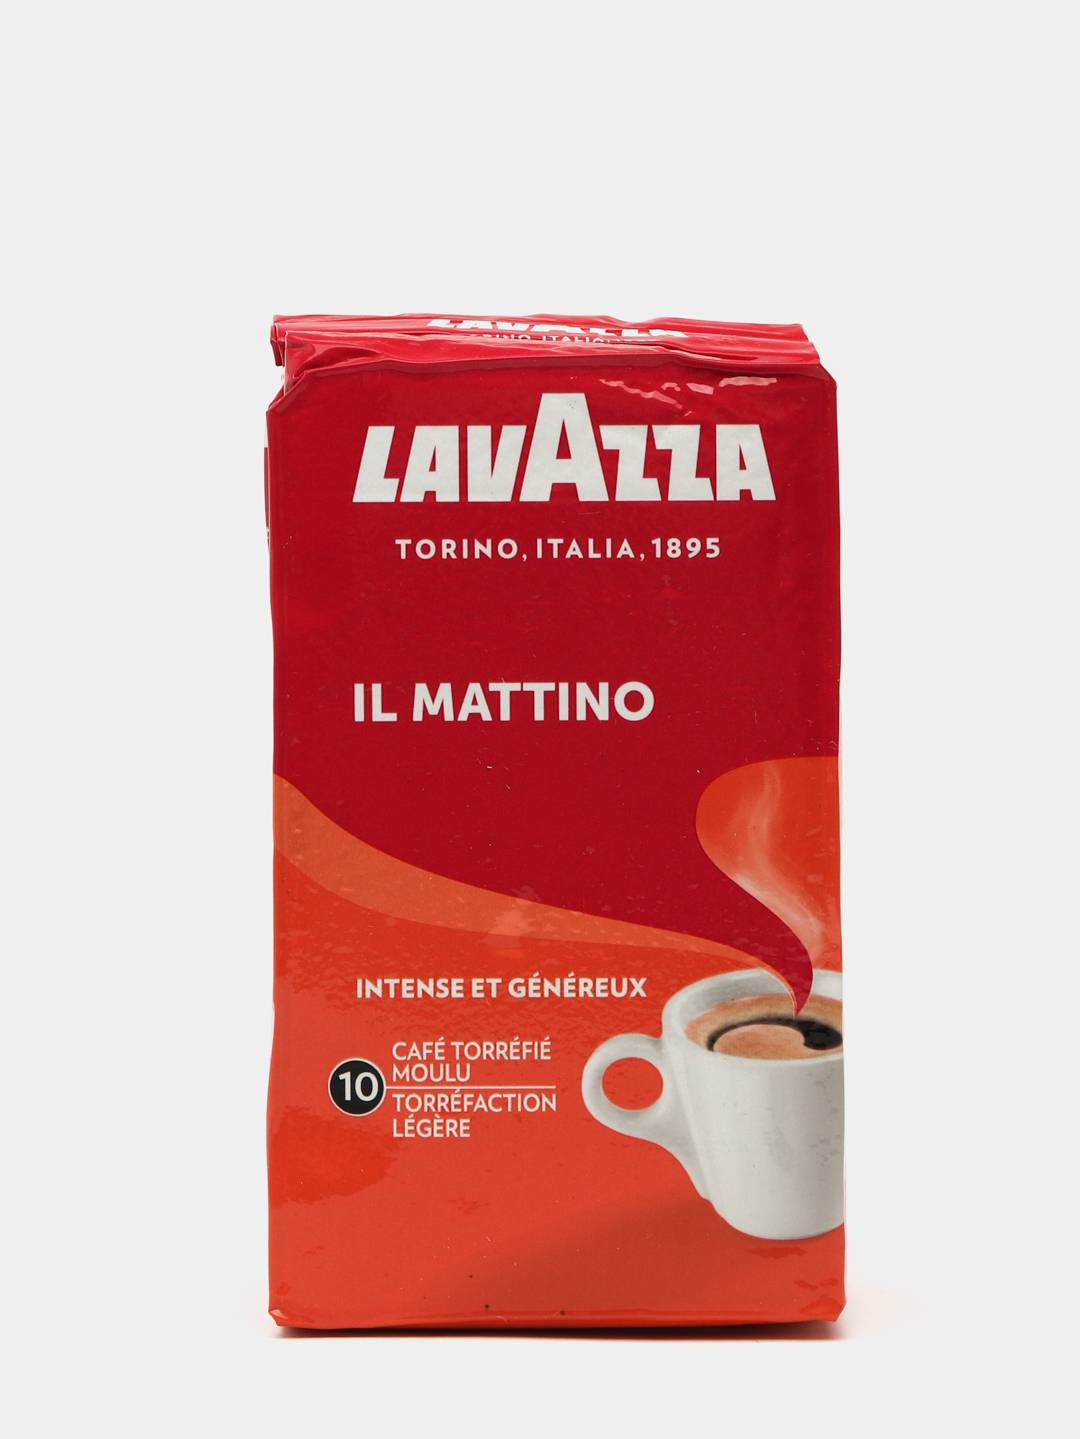 Лавацц крема купить. Lavazza кофе молотый 250 гр. Кофе молотый Lavazza il mattino вакуумная упаковка. Кофе Лавацца в вакуумной упаковке. Lavazza 7/10.